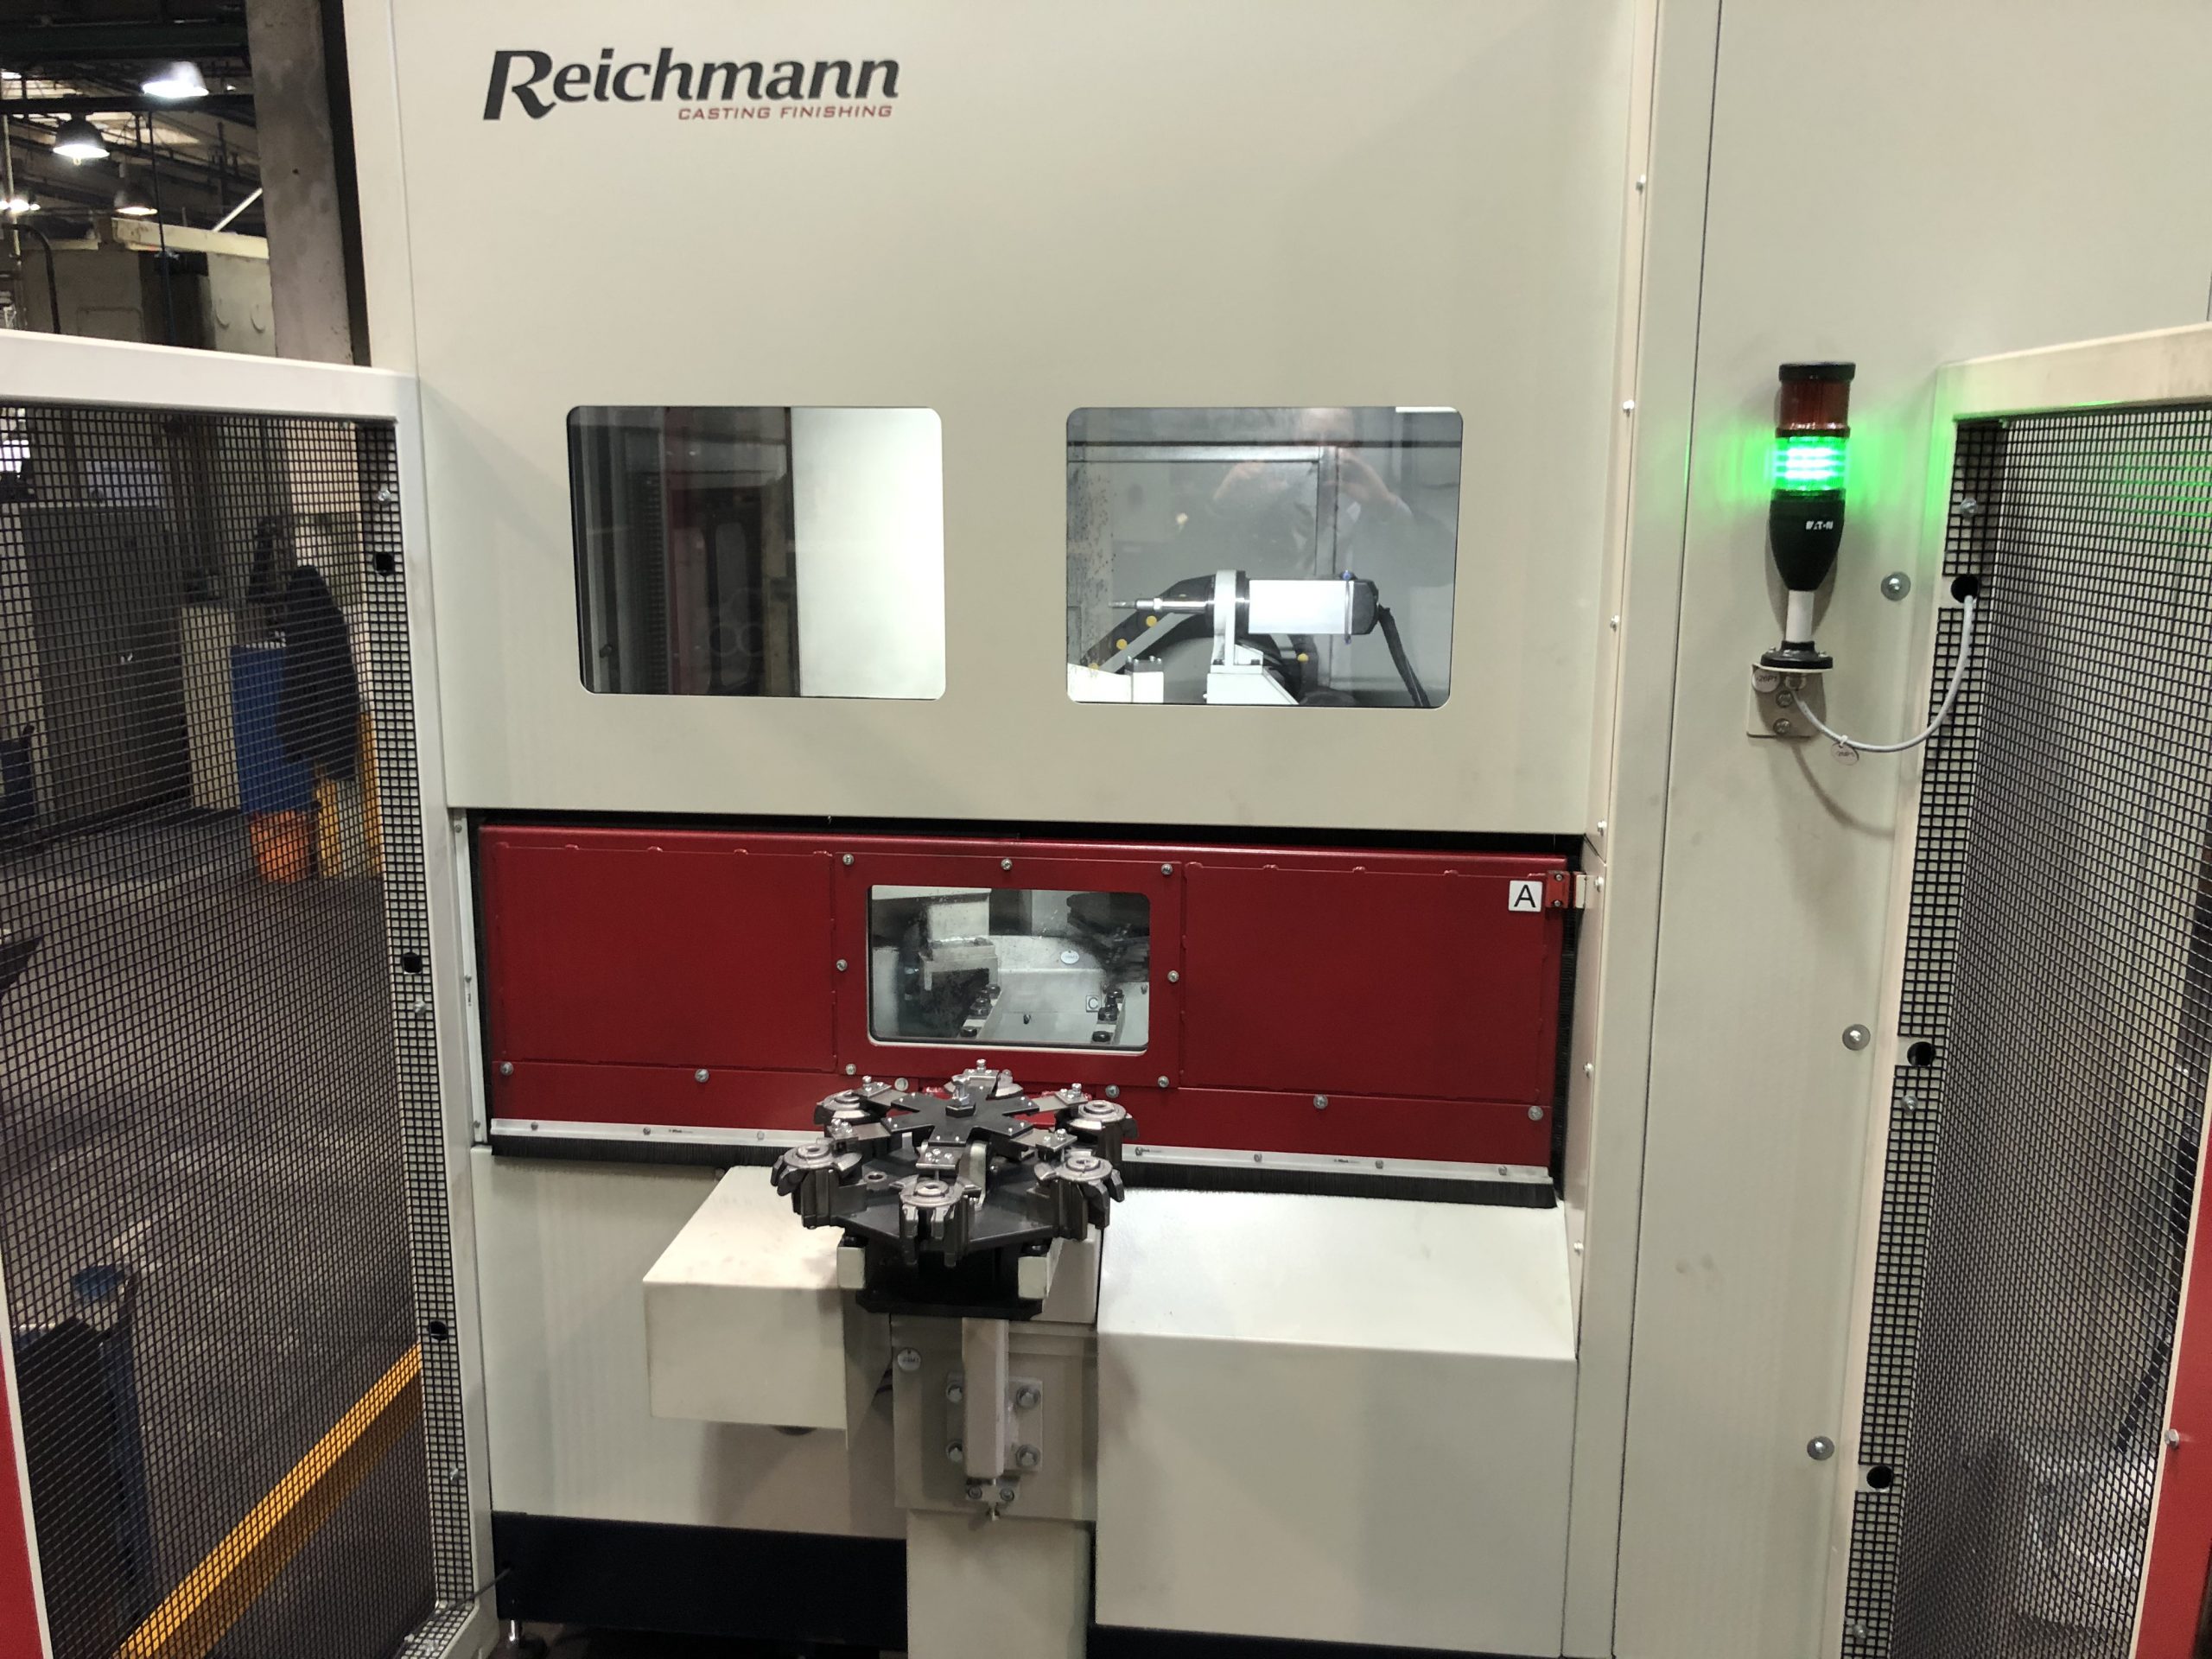 GRINDING ON THE REICHMANN RFC 500-T CNC MACHINE